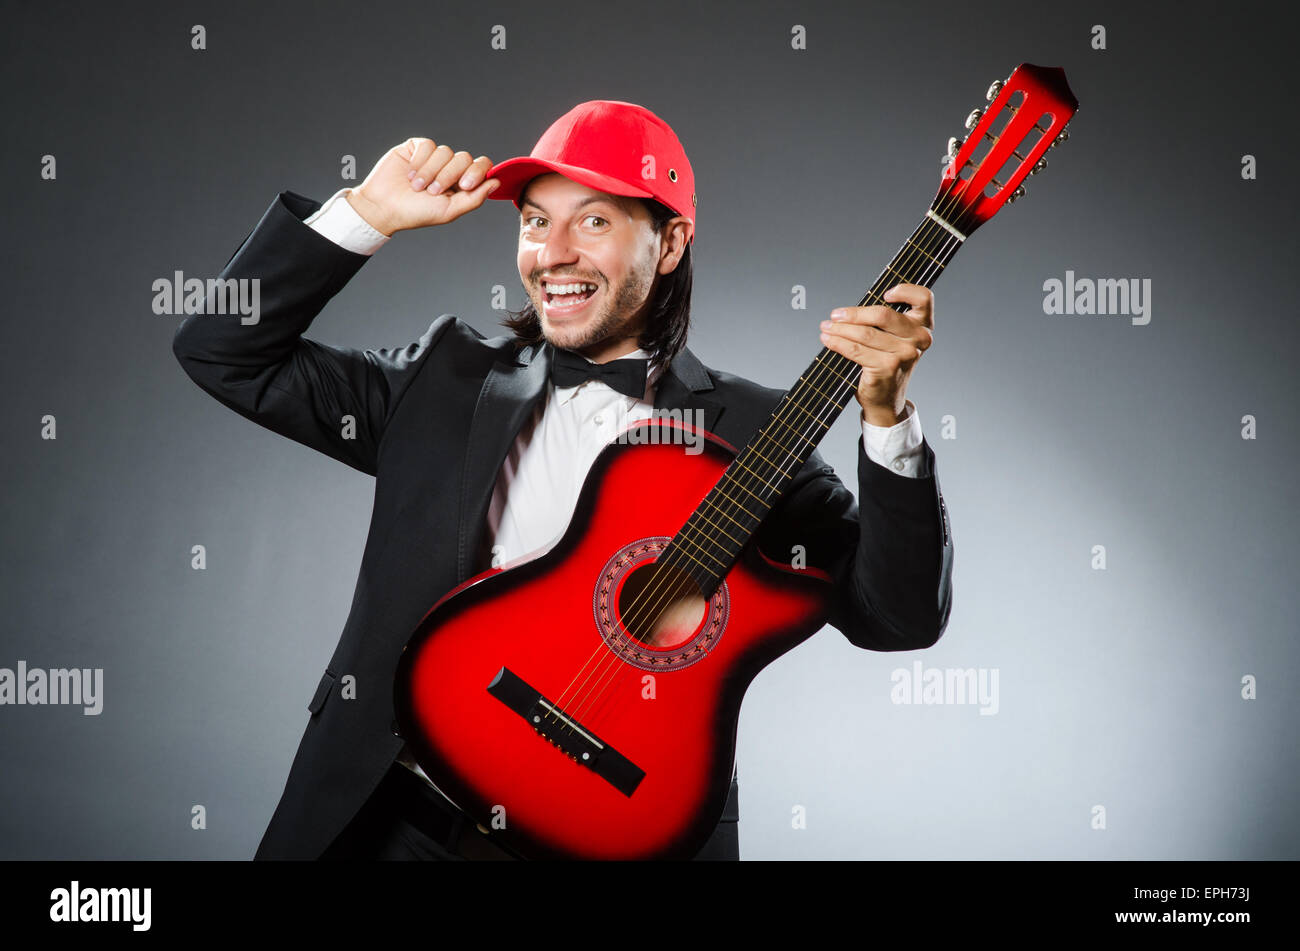 Funny guitar player in studio Stock Photo - Alamy